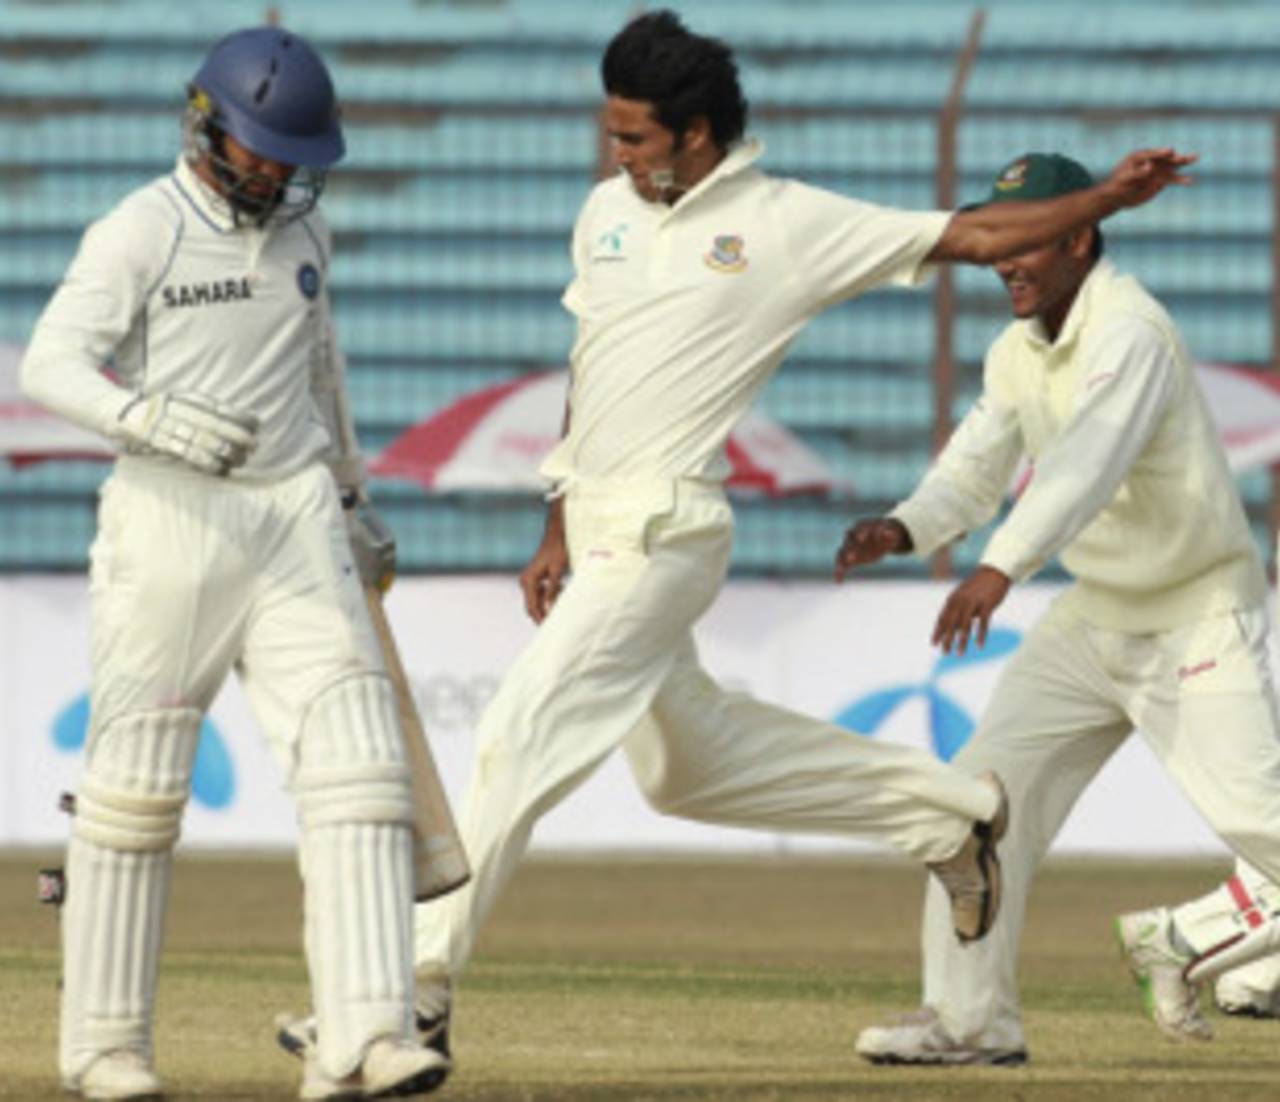 Shahadat Hossain exults after dismissing Dinesh Karthik, Bangladesh v India, 1st Test, Chittagong, 1st day, January 17, 2010